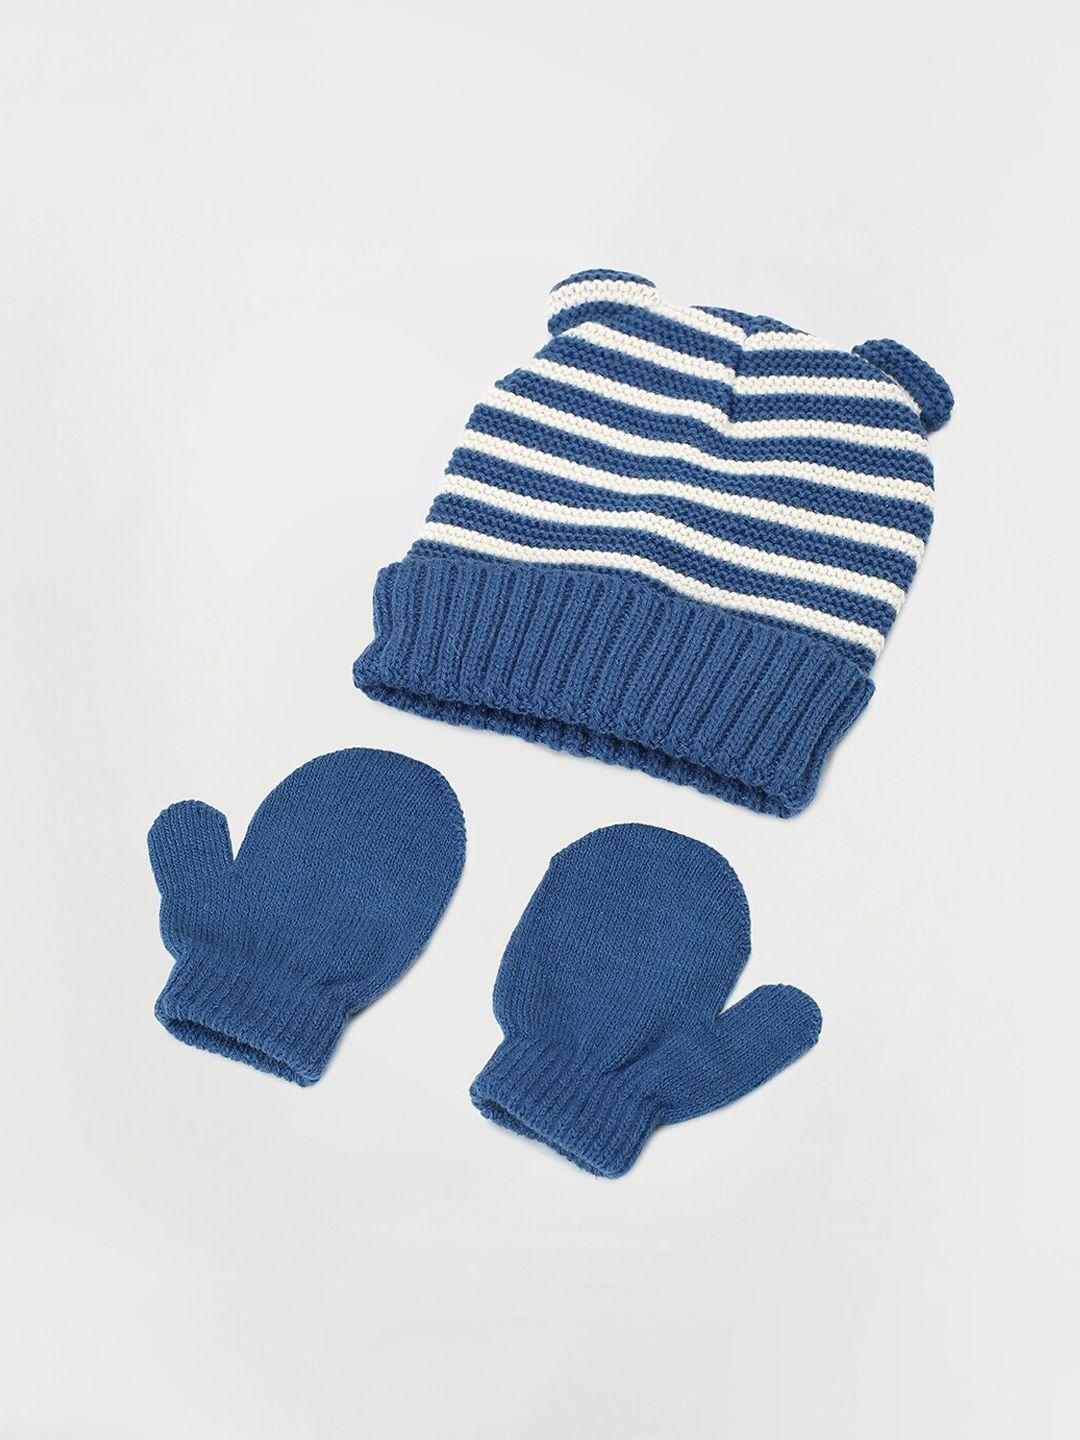 max infants boys blue pattern mittens & cap